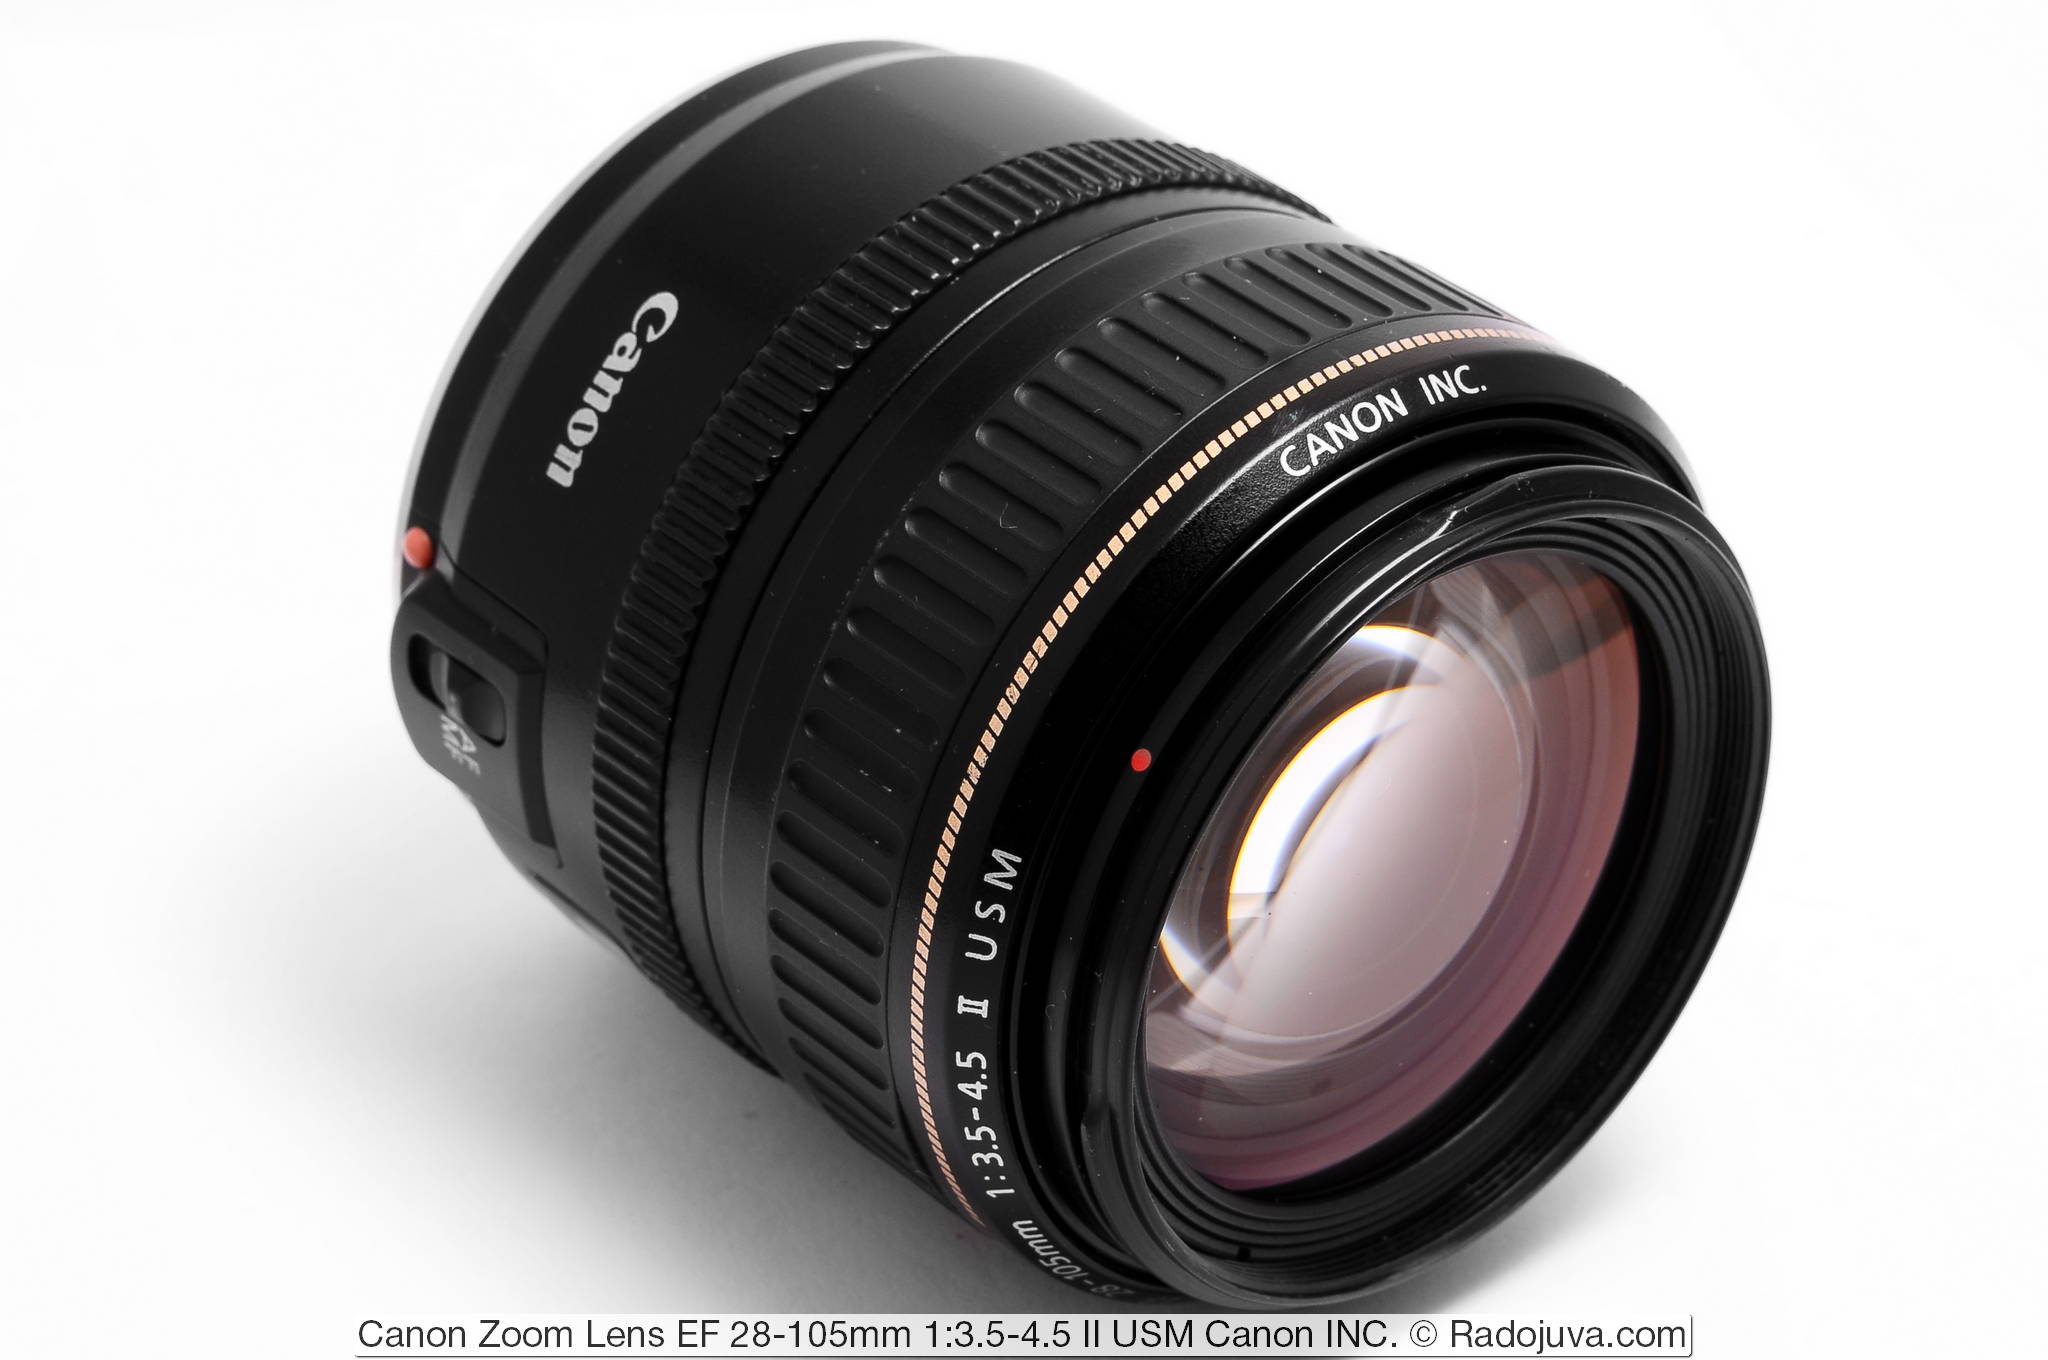 Canon Zoom Lens EF 28-105mm 1:3.5-4.5 II USM Canon INC.